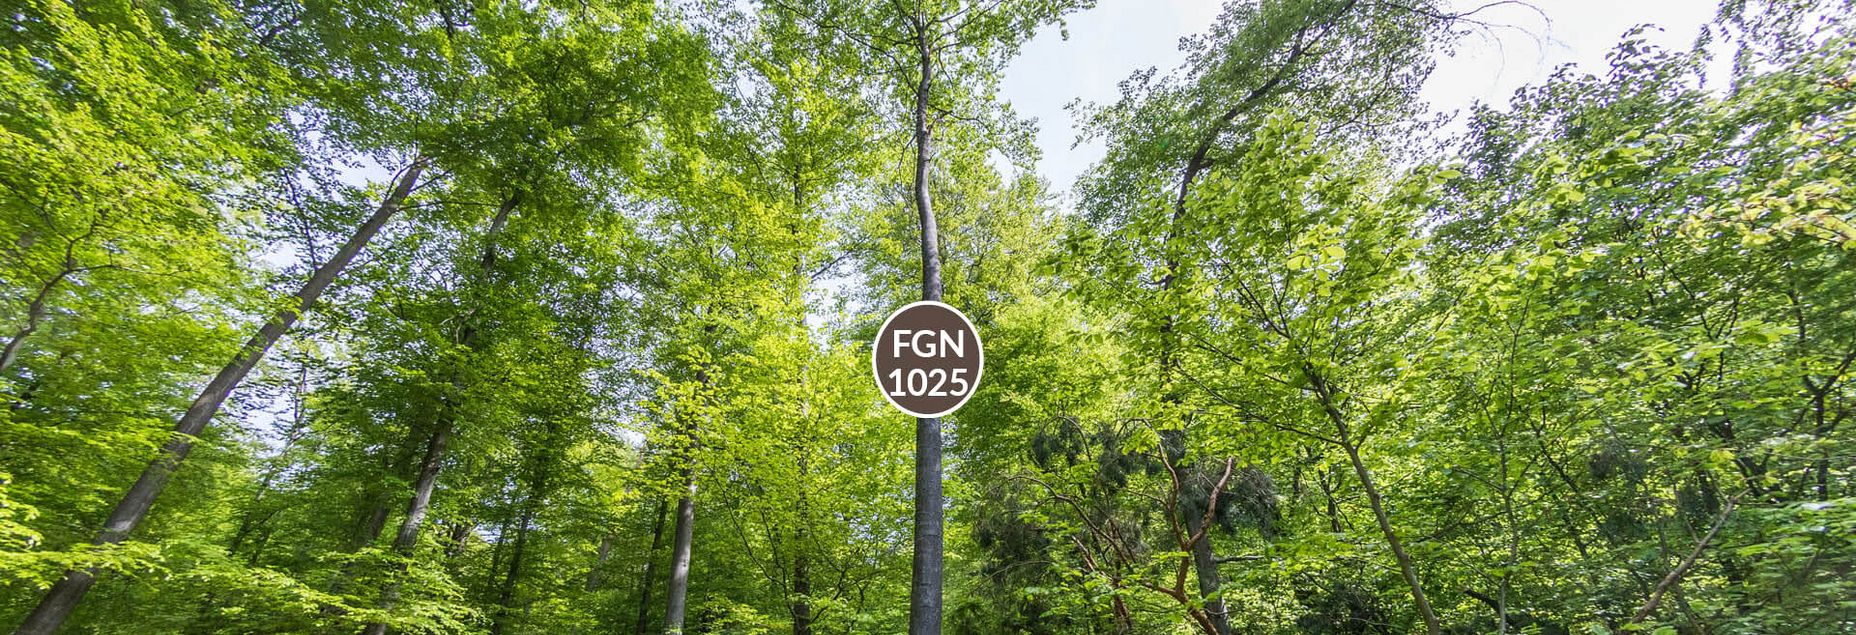 Baum FGN 1025 - Fisheyeperspektive